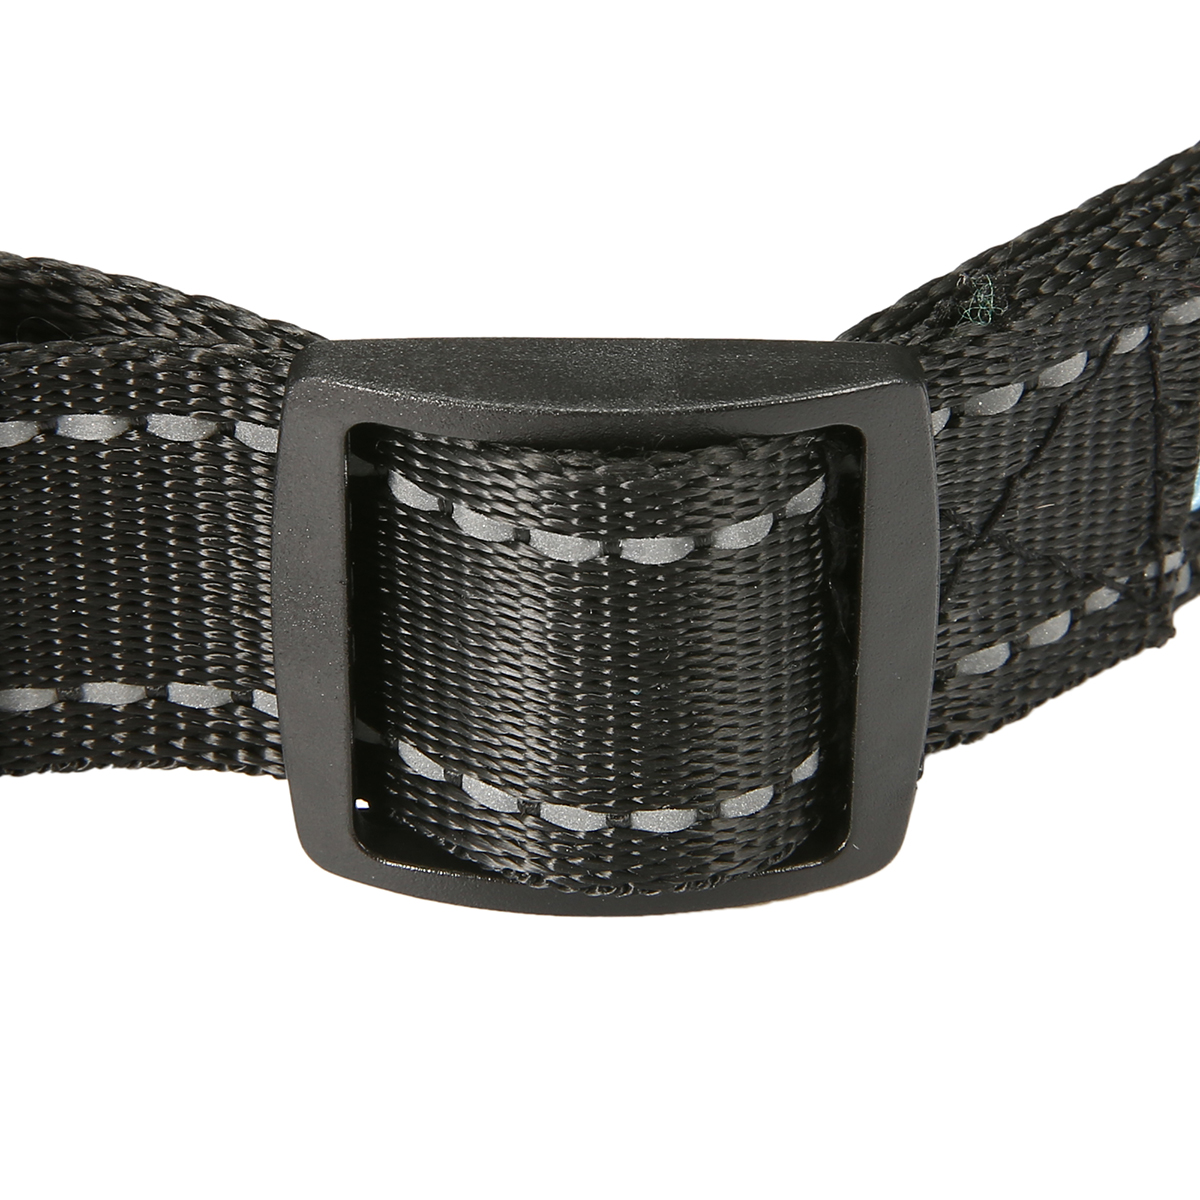 Ao ar livre Nylon LED Pet Cachorro Collar Night Safety Anti-lost Flashing Glow Collars Supplies 